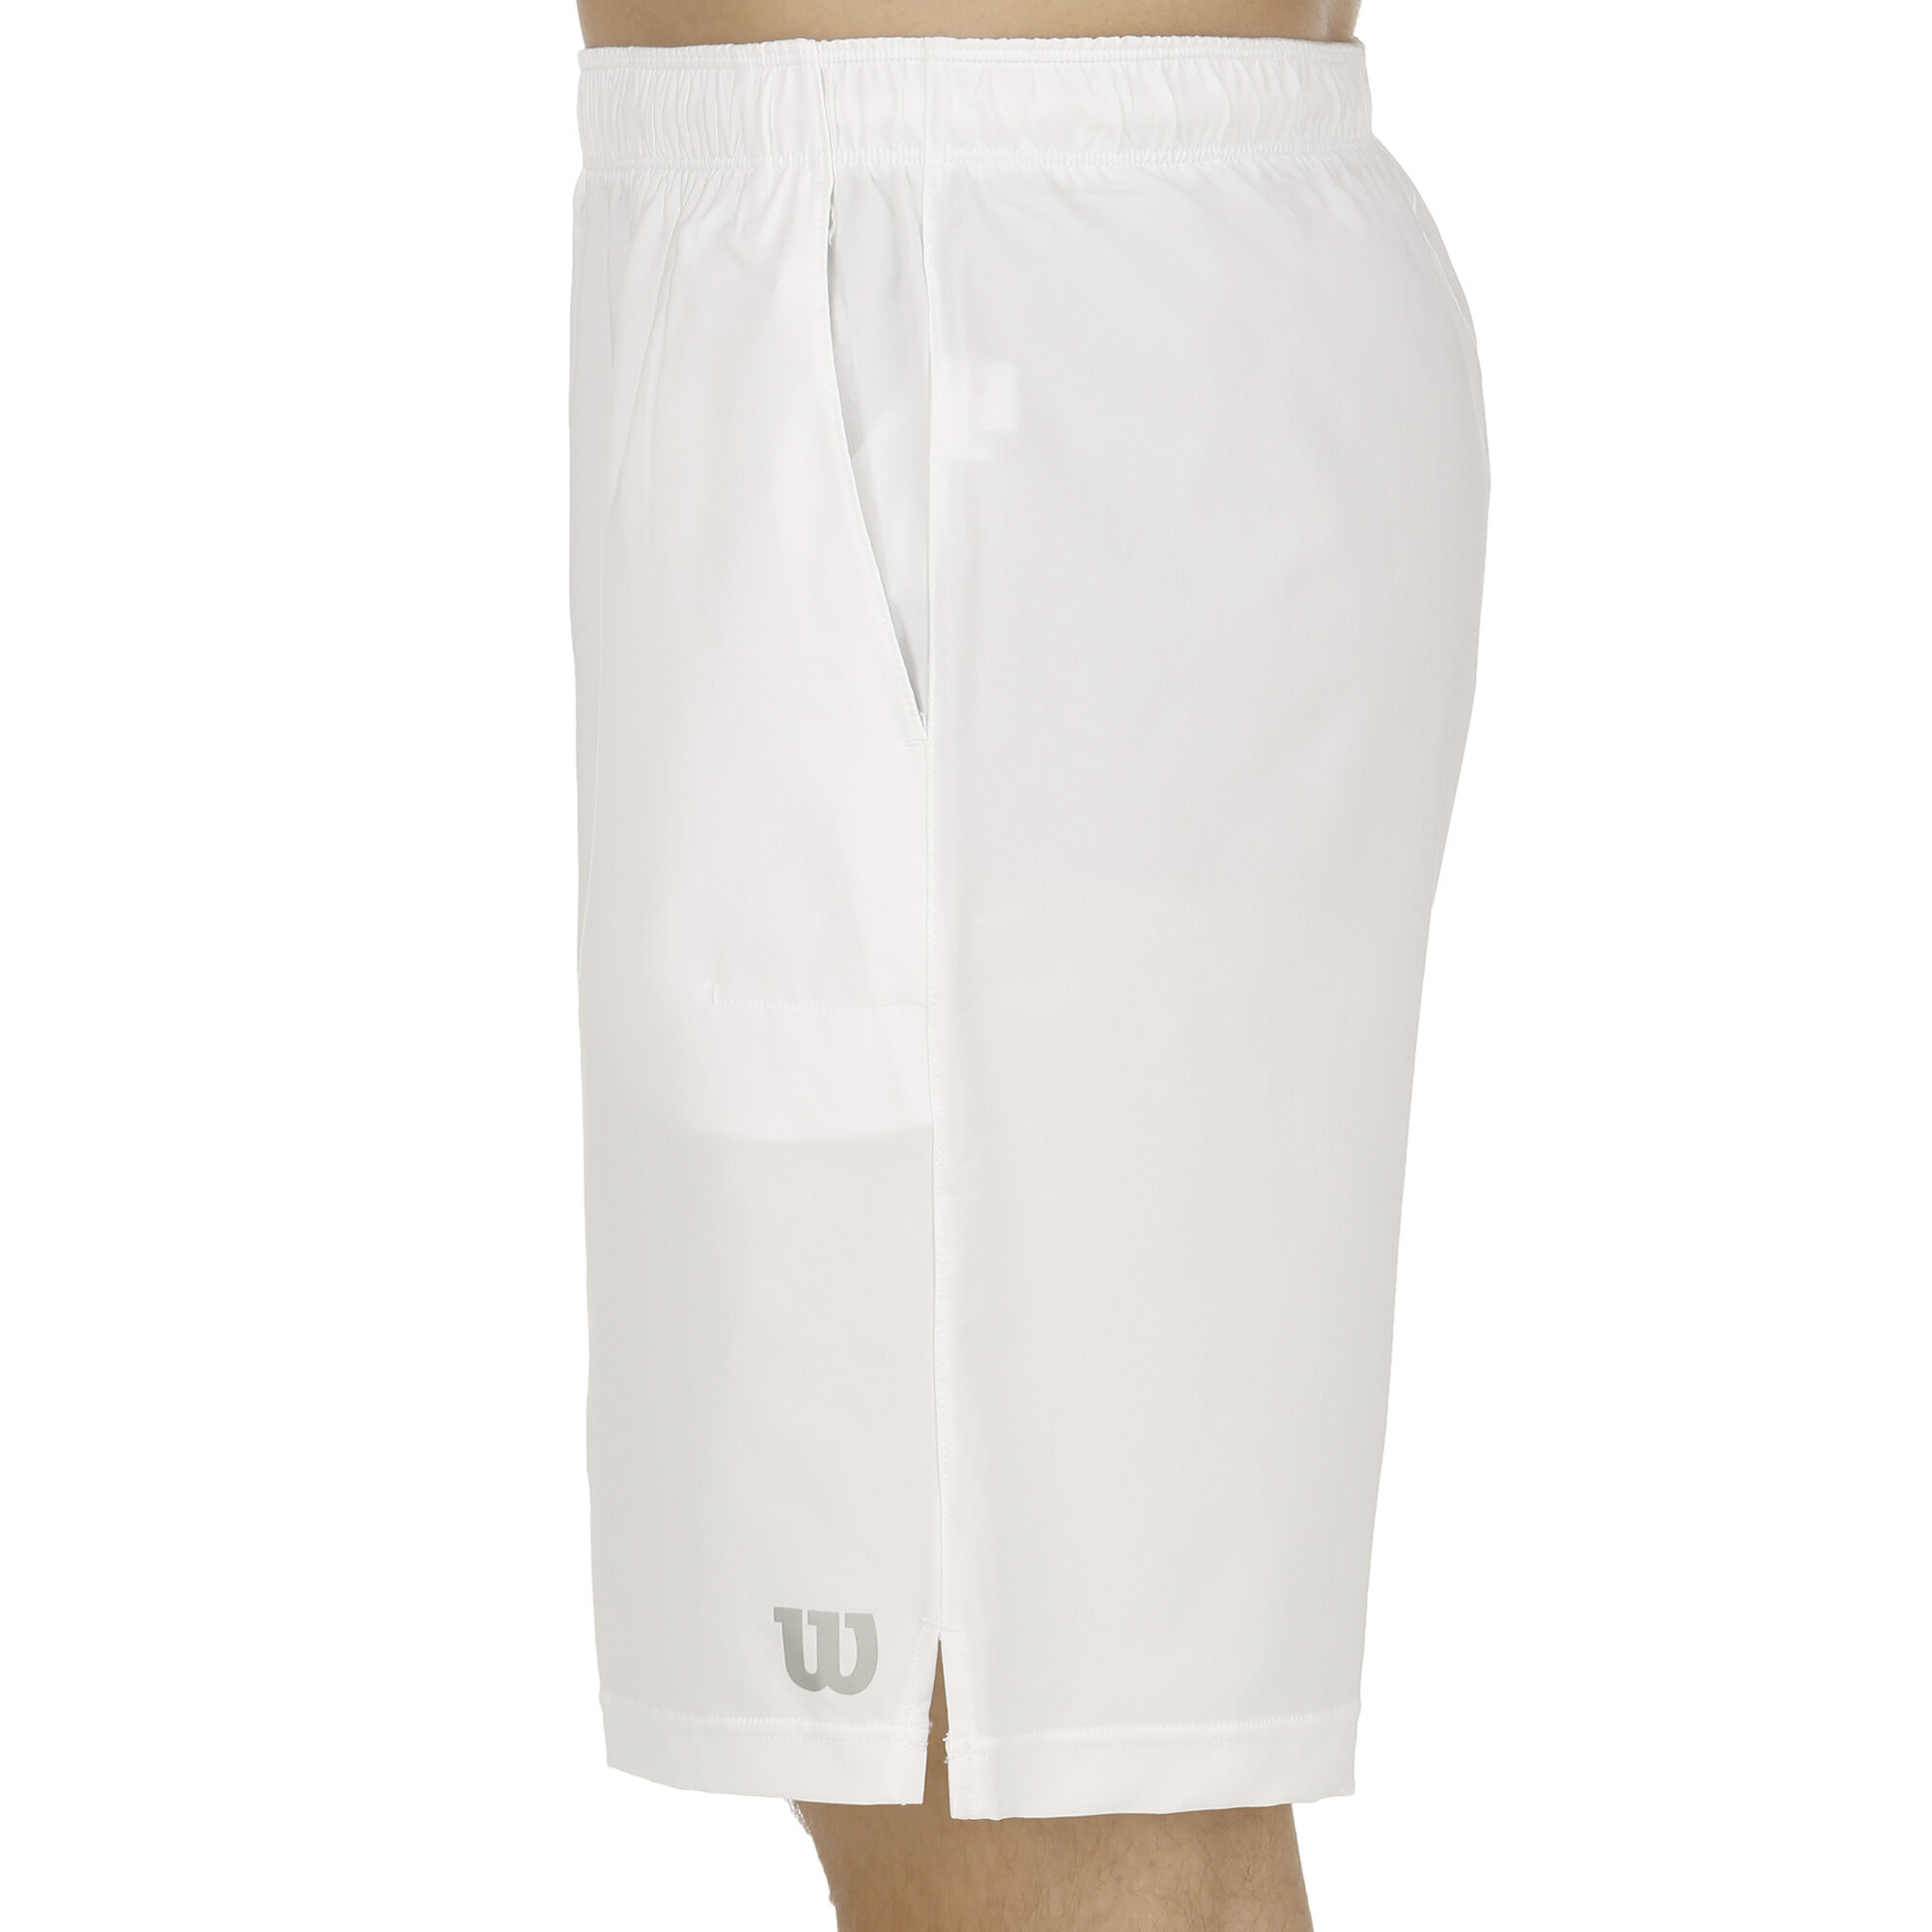 Wilson Men's Rush 9 Inch Woven Shorts (White)